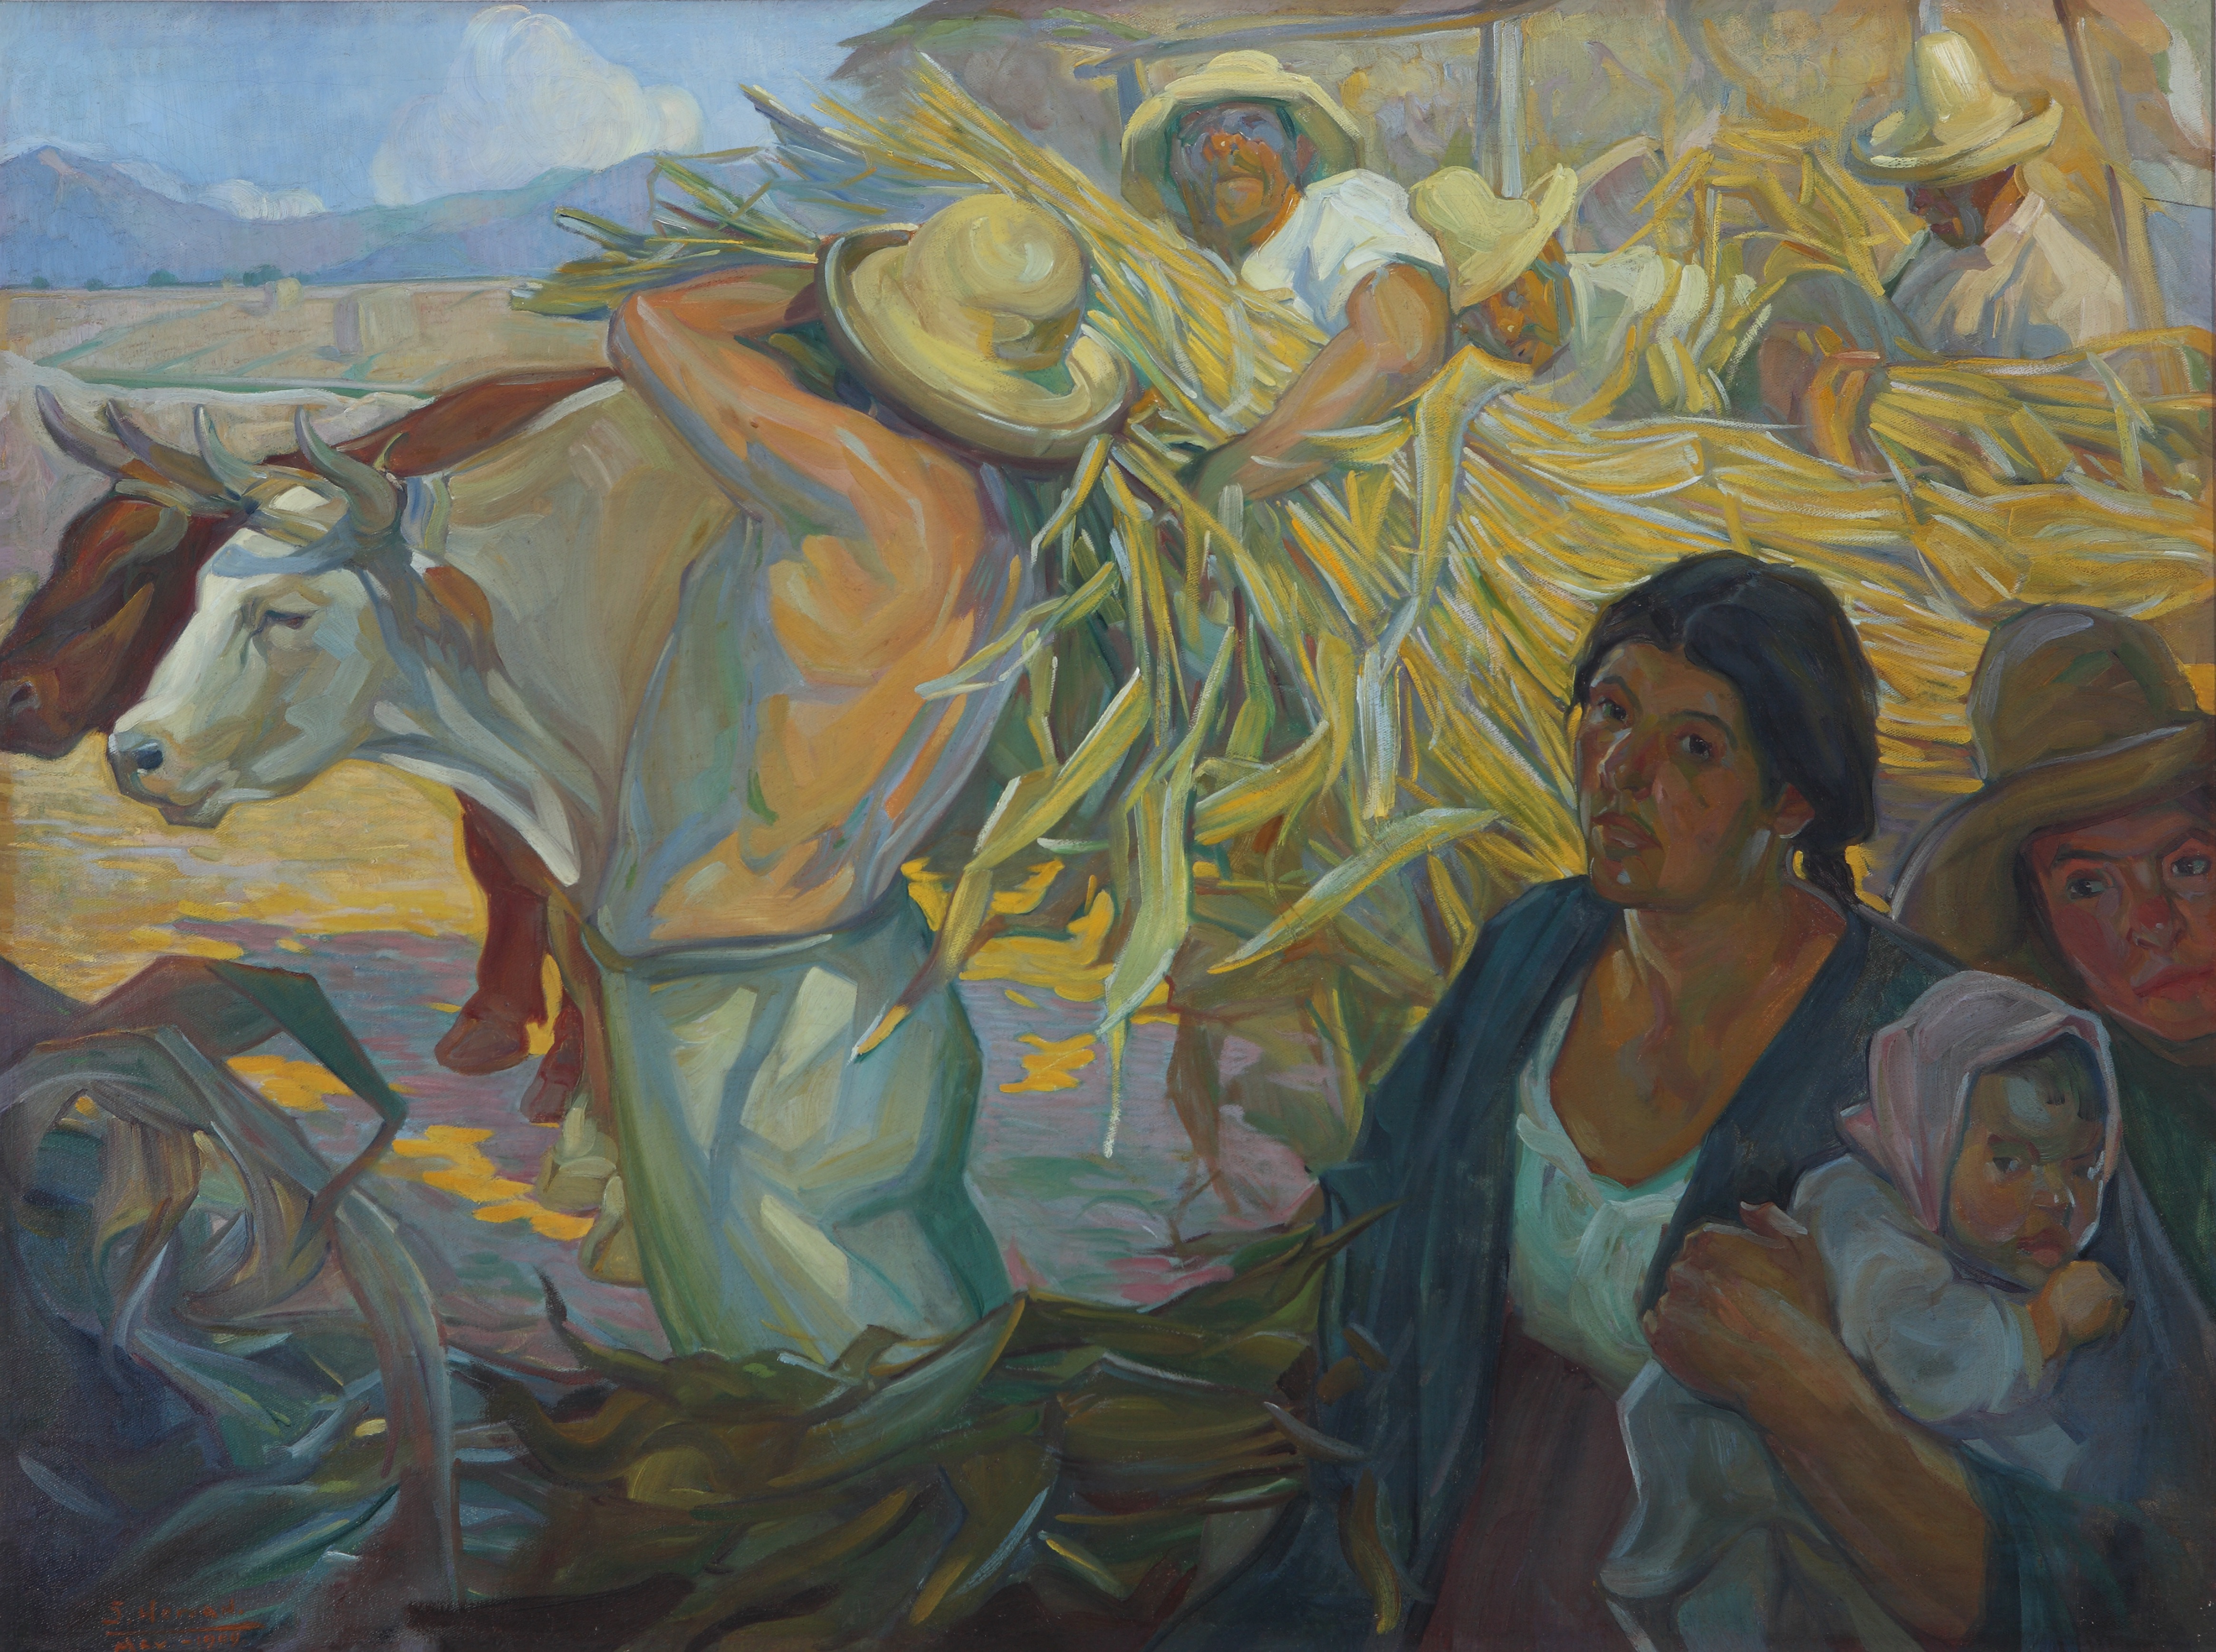 La cosecha by Saturnino Herrán - 1909 - 72 x 100 cm 